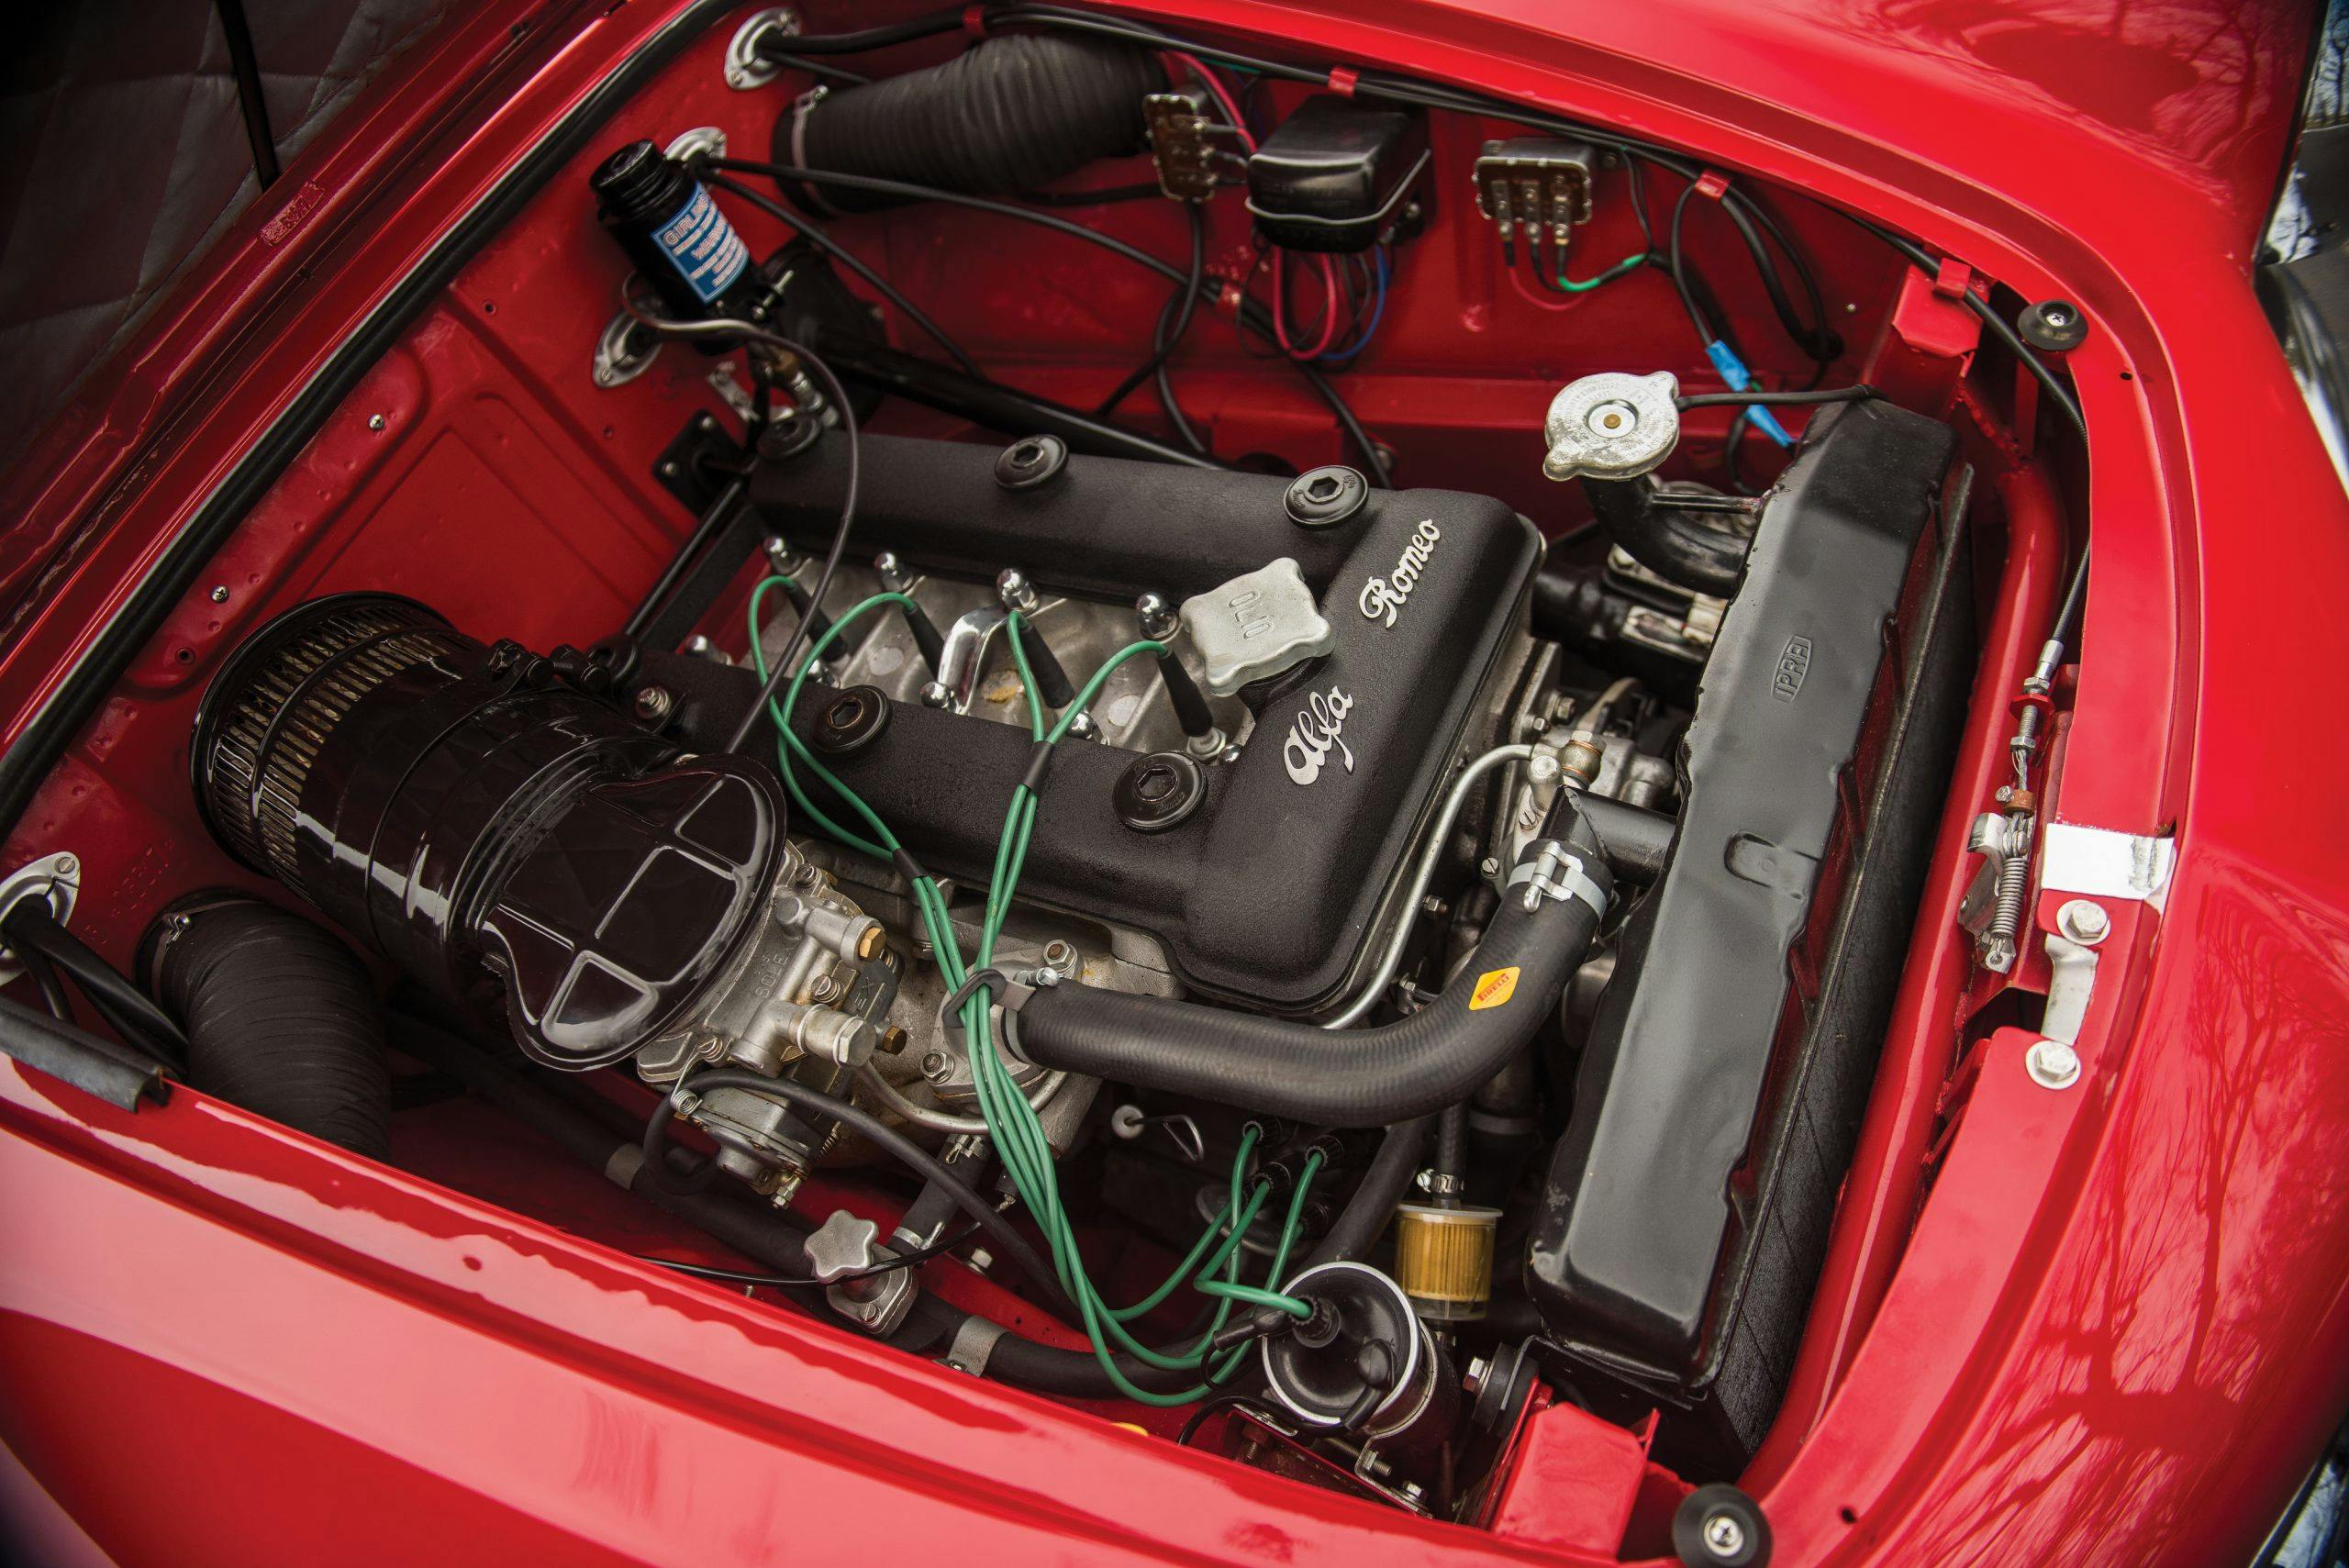 1959 Alfa Romeo Giulietta Spider engine bay